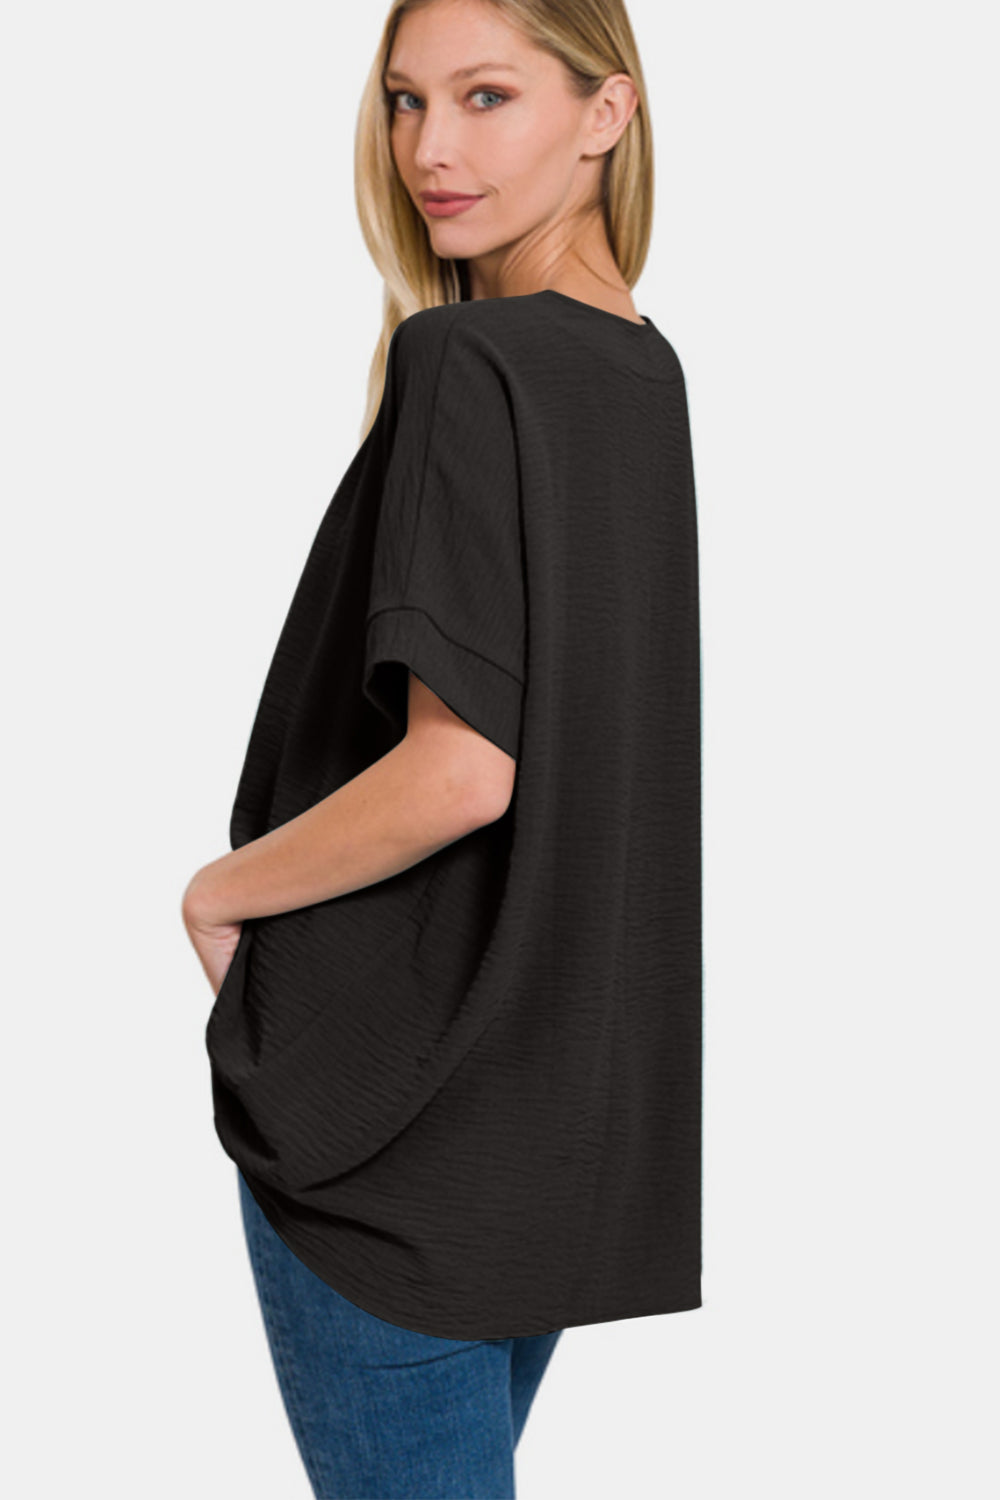 Zenana Full Size V-Neck Short Sleeve Top Shirt